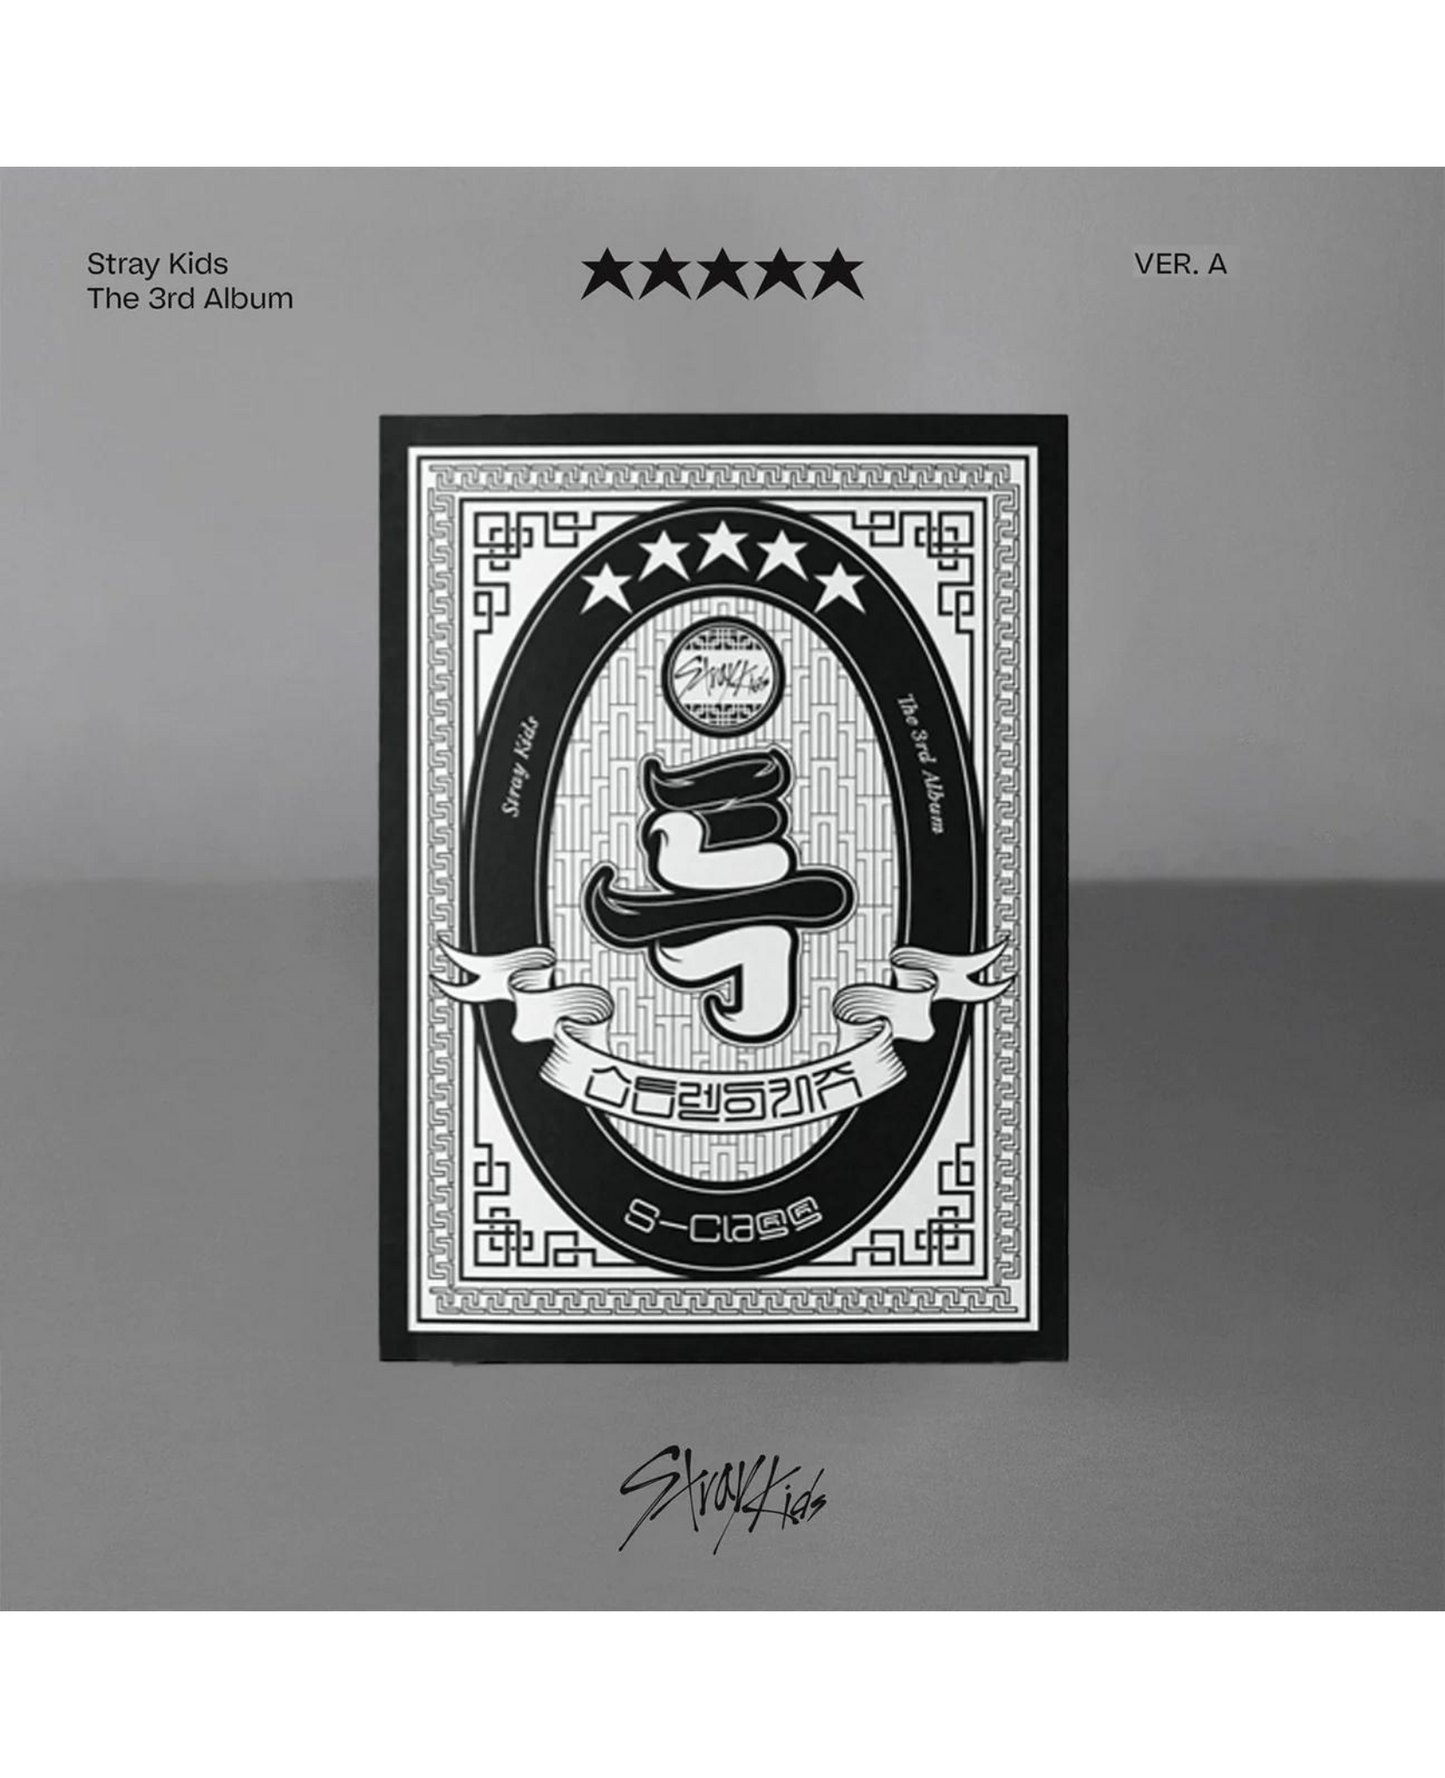 STRAY KIDS - 3rd Album - 5-STAR A/B/C Version Stray Kids